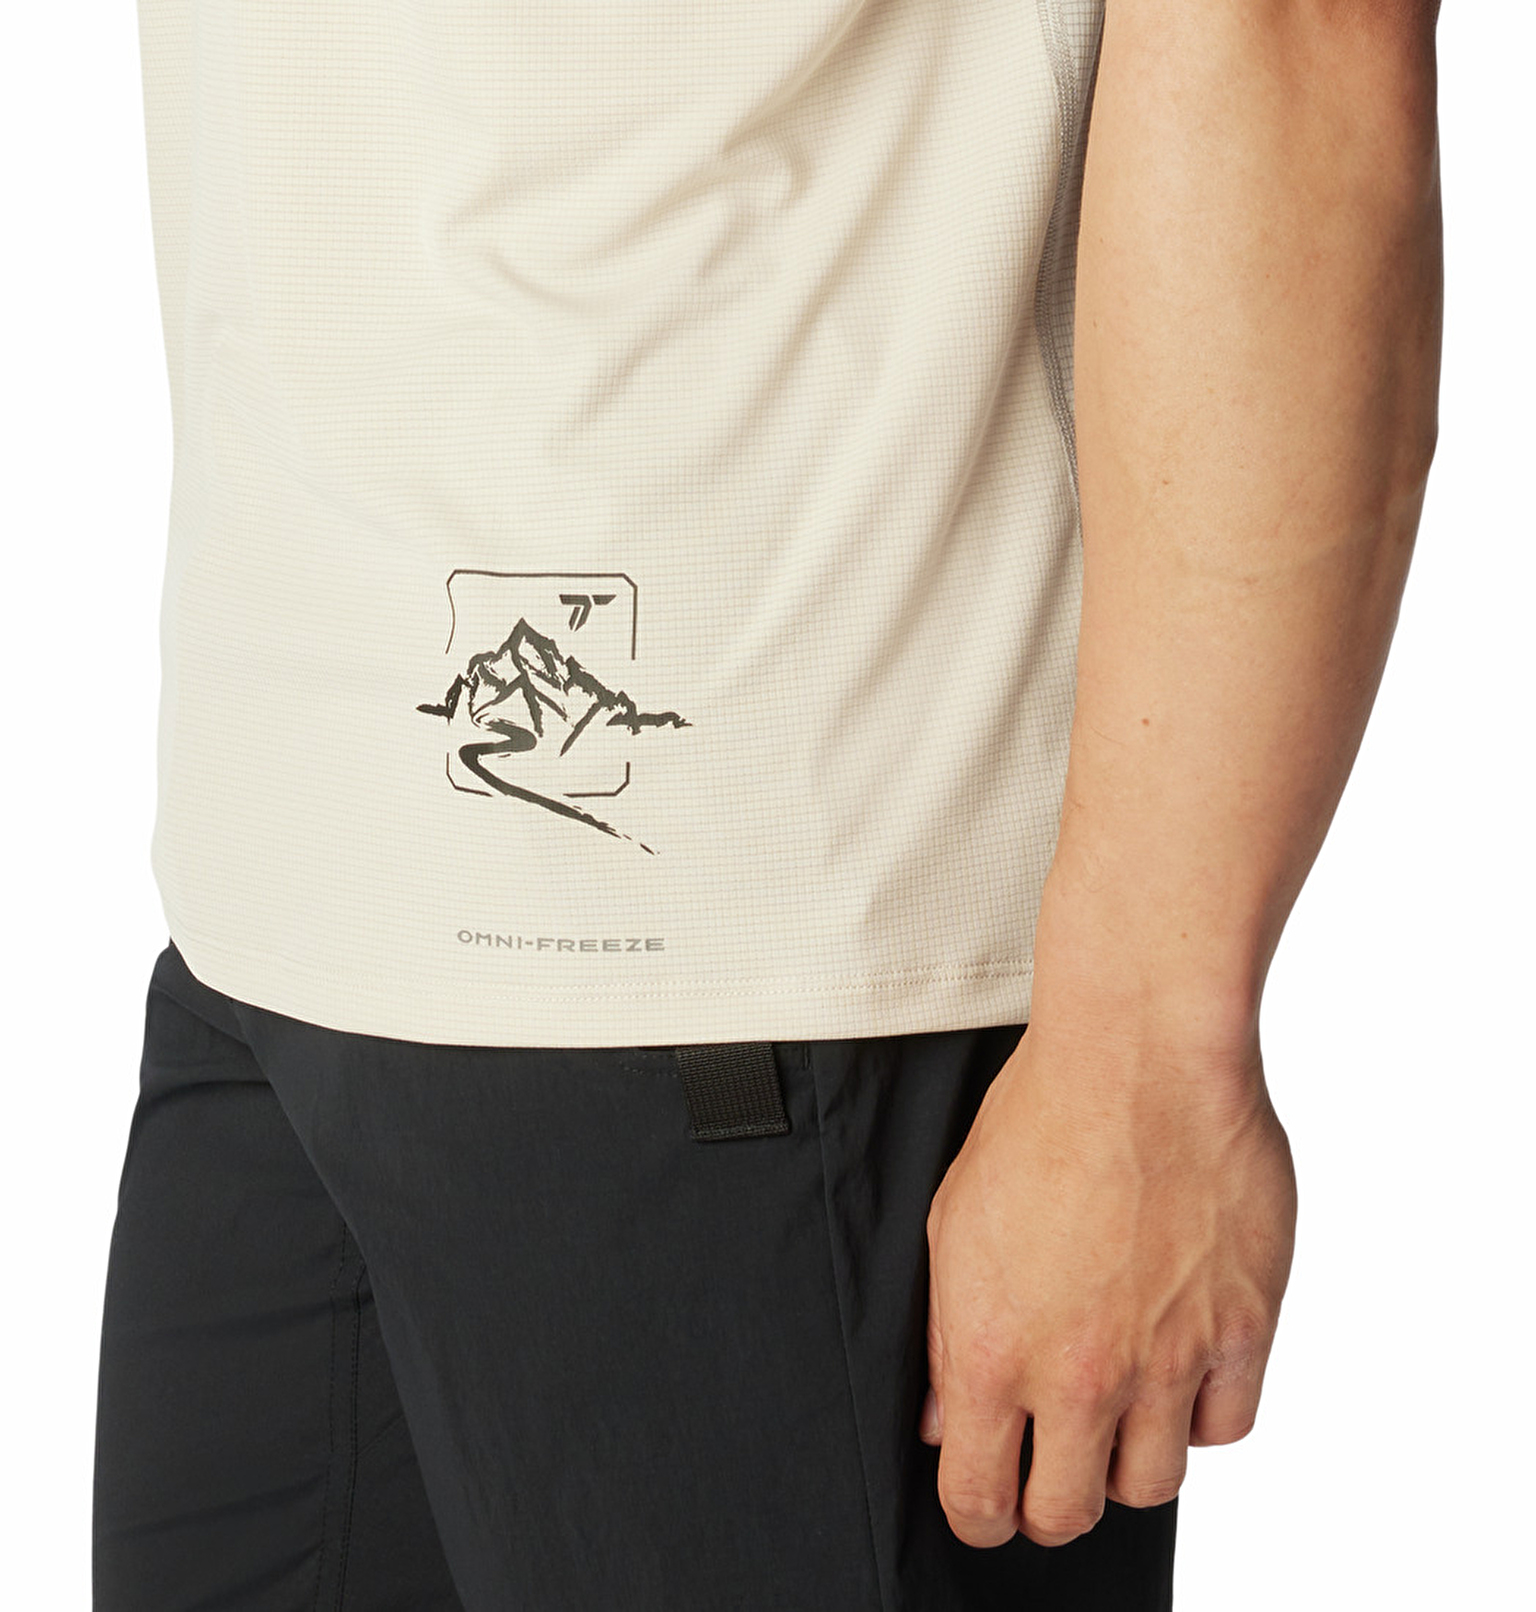 Cirque River Graphic Erkek Kısa Kollu T-Shirt